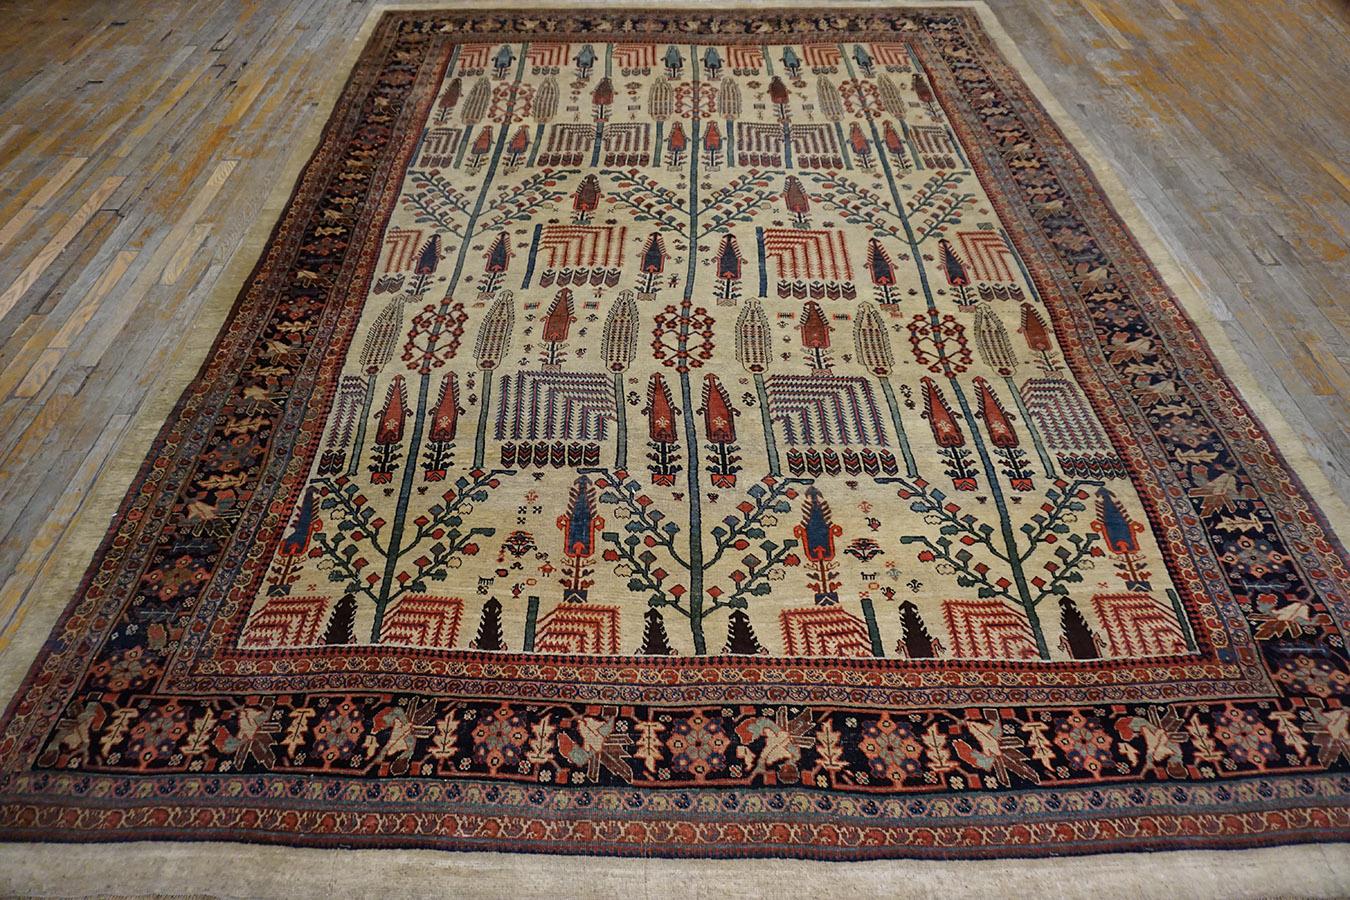 Late 19th Century 19th Century W. Persian Bijar Carpet with Bid Majnoon Design ( 8'9